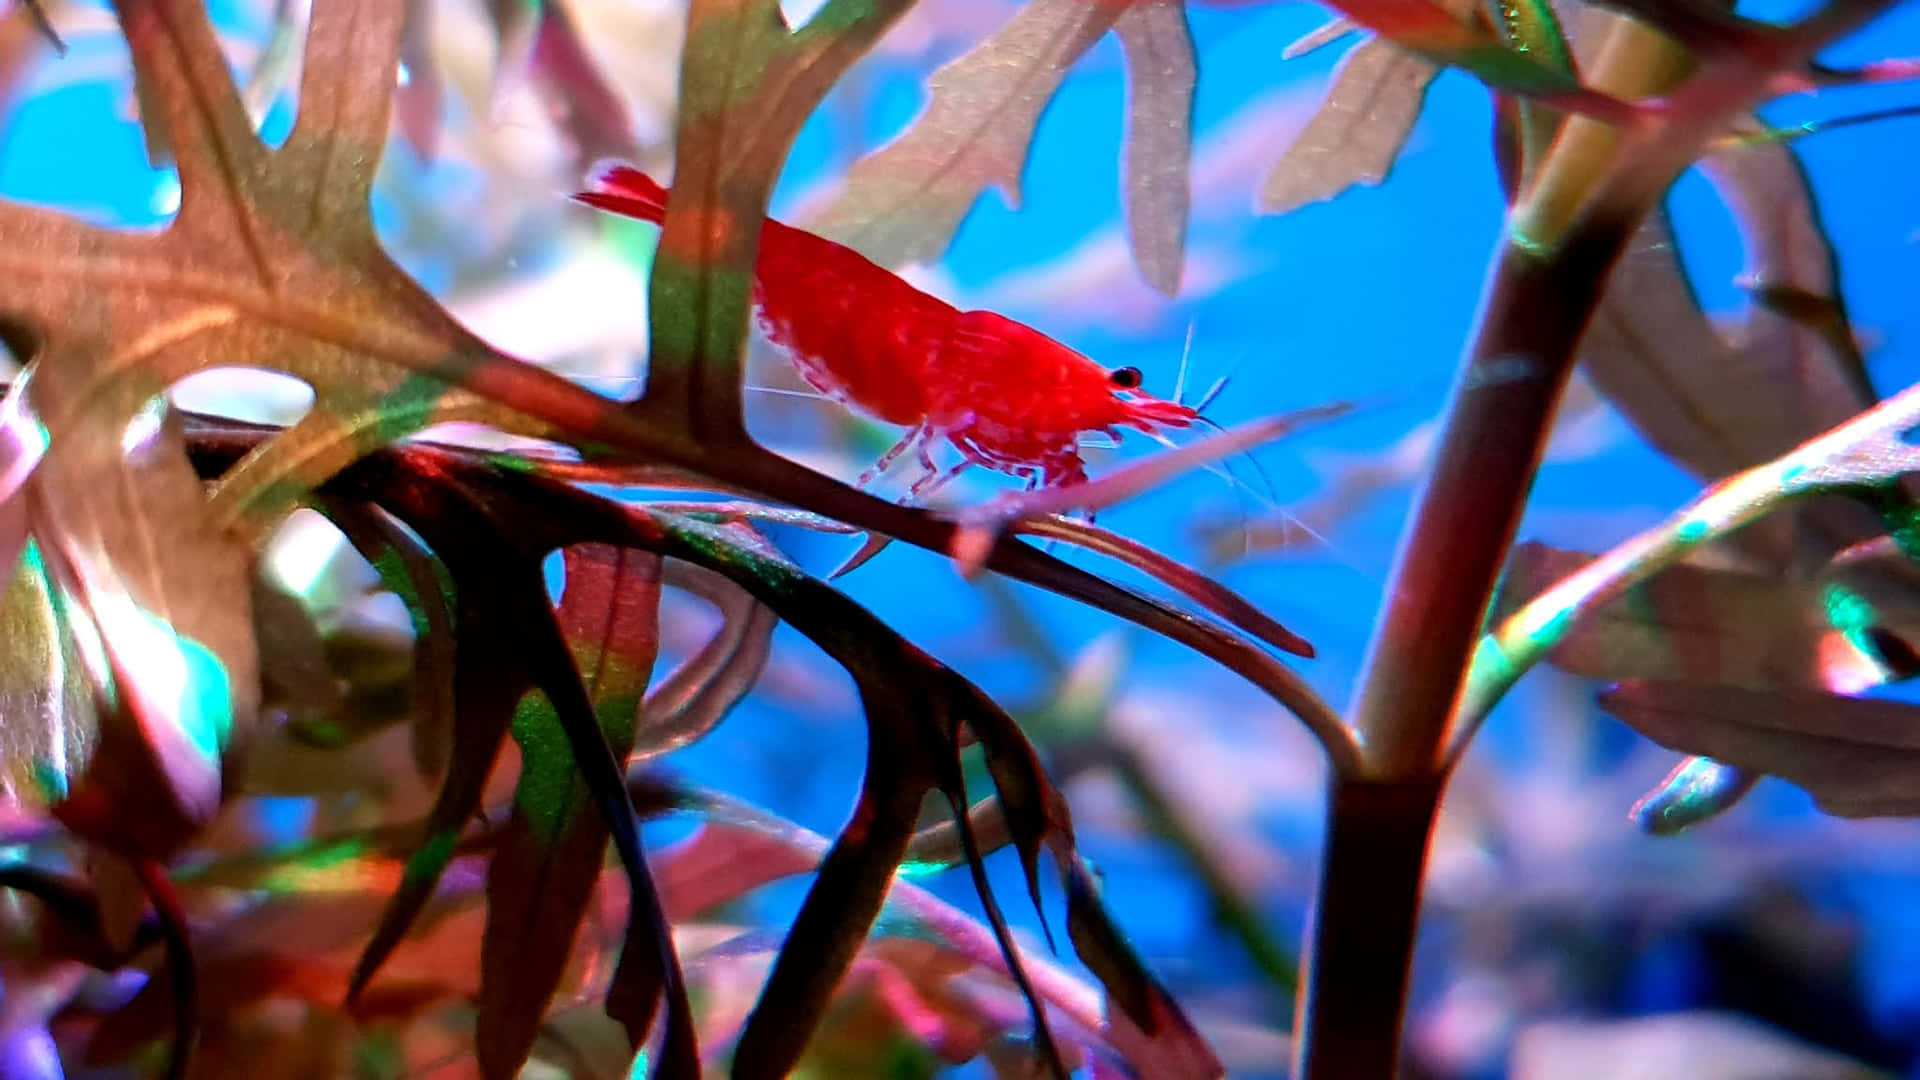 A Vibrant Close-up Of A Colorful Marine Shrimp In Its Natural Habitat. Wallpaper